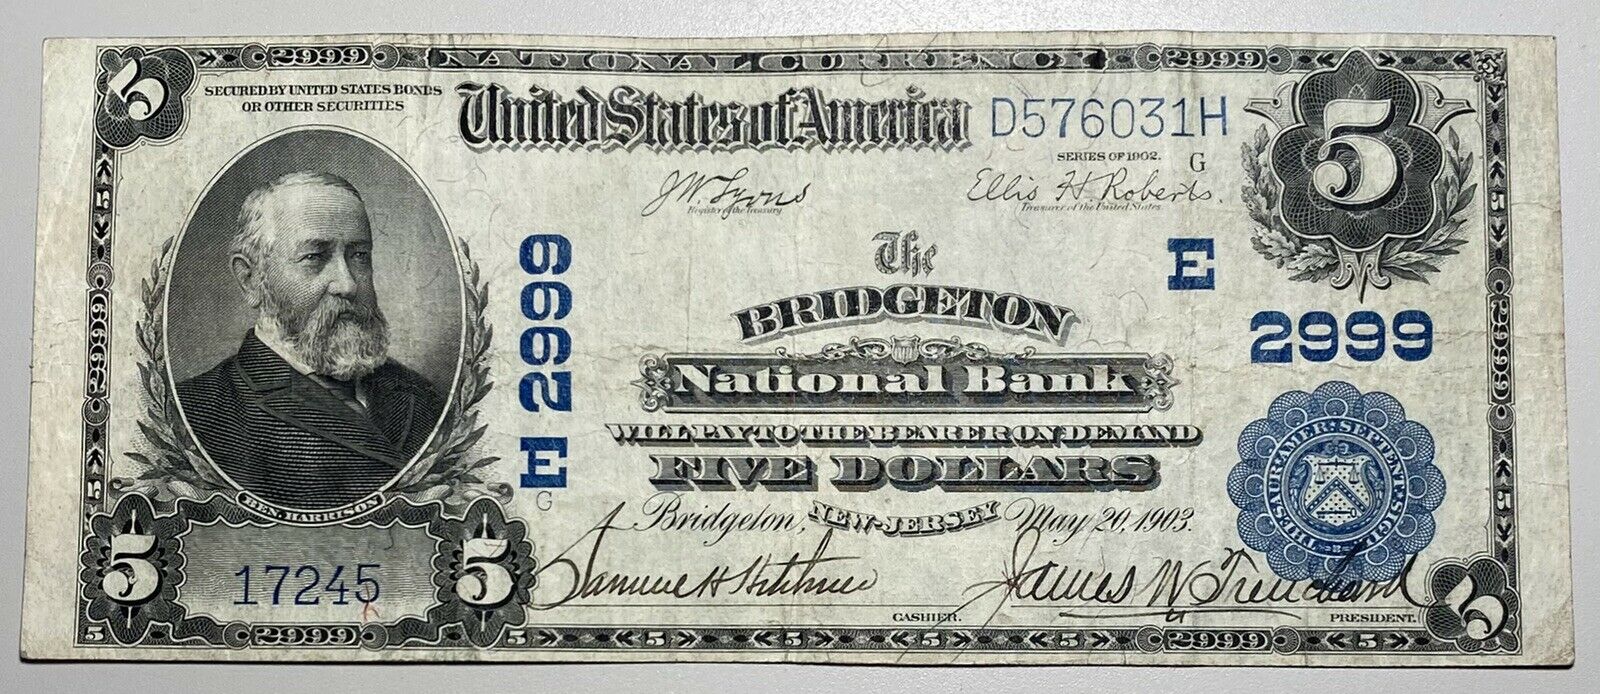 1902 $5 Bridgeton, Nj Large Size National Ch# 2999